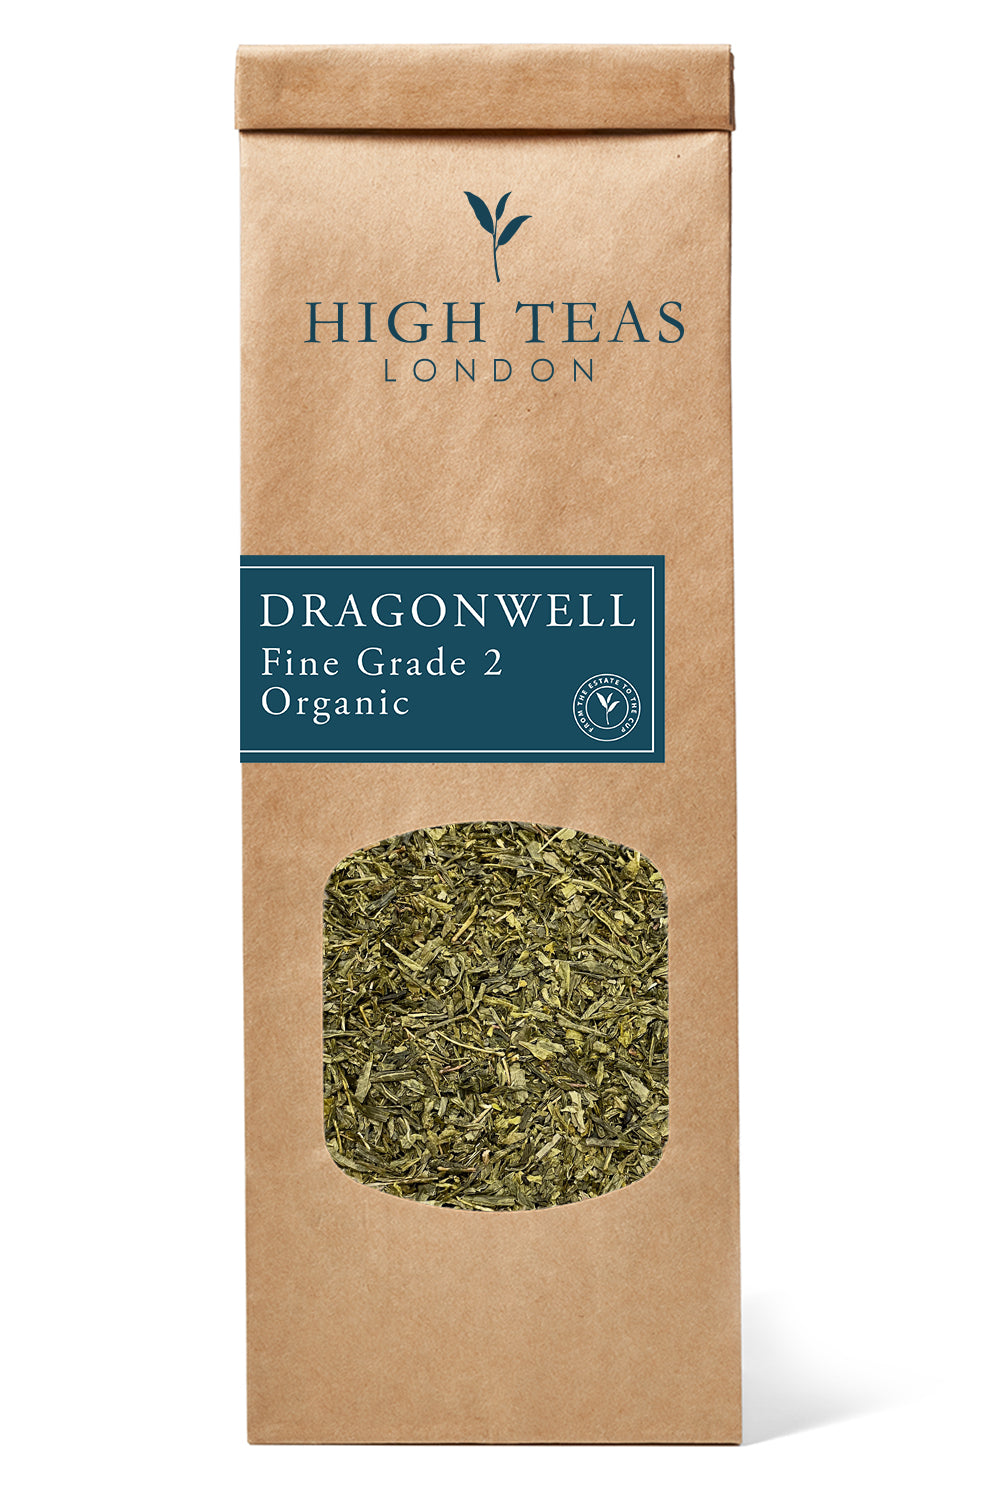 Dragonwell Lung Jing - Fine Grade 2 Organic-50g-Loose Leaf Tea-High Teas